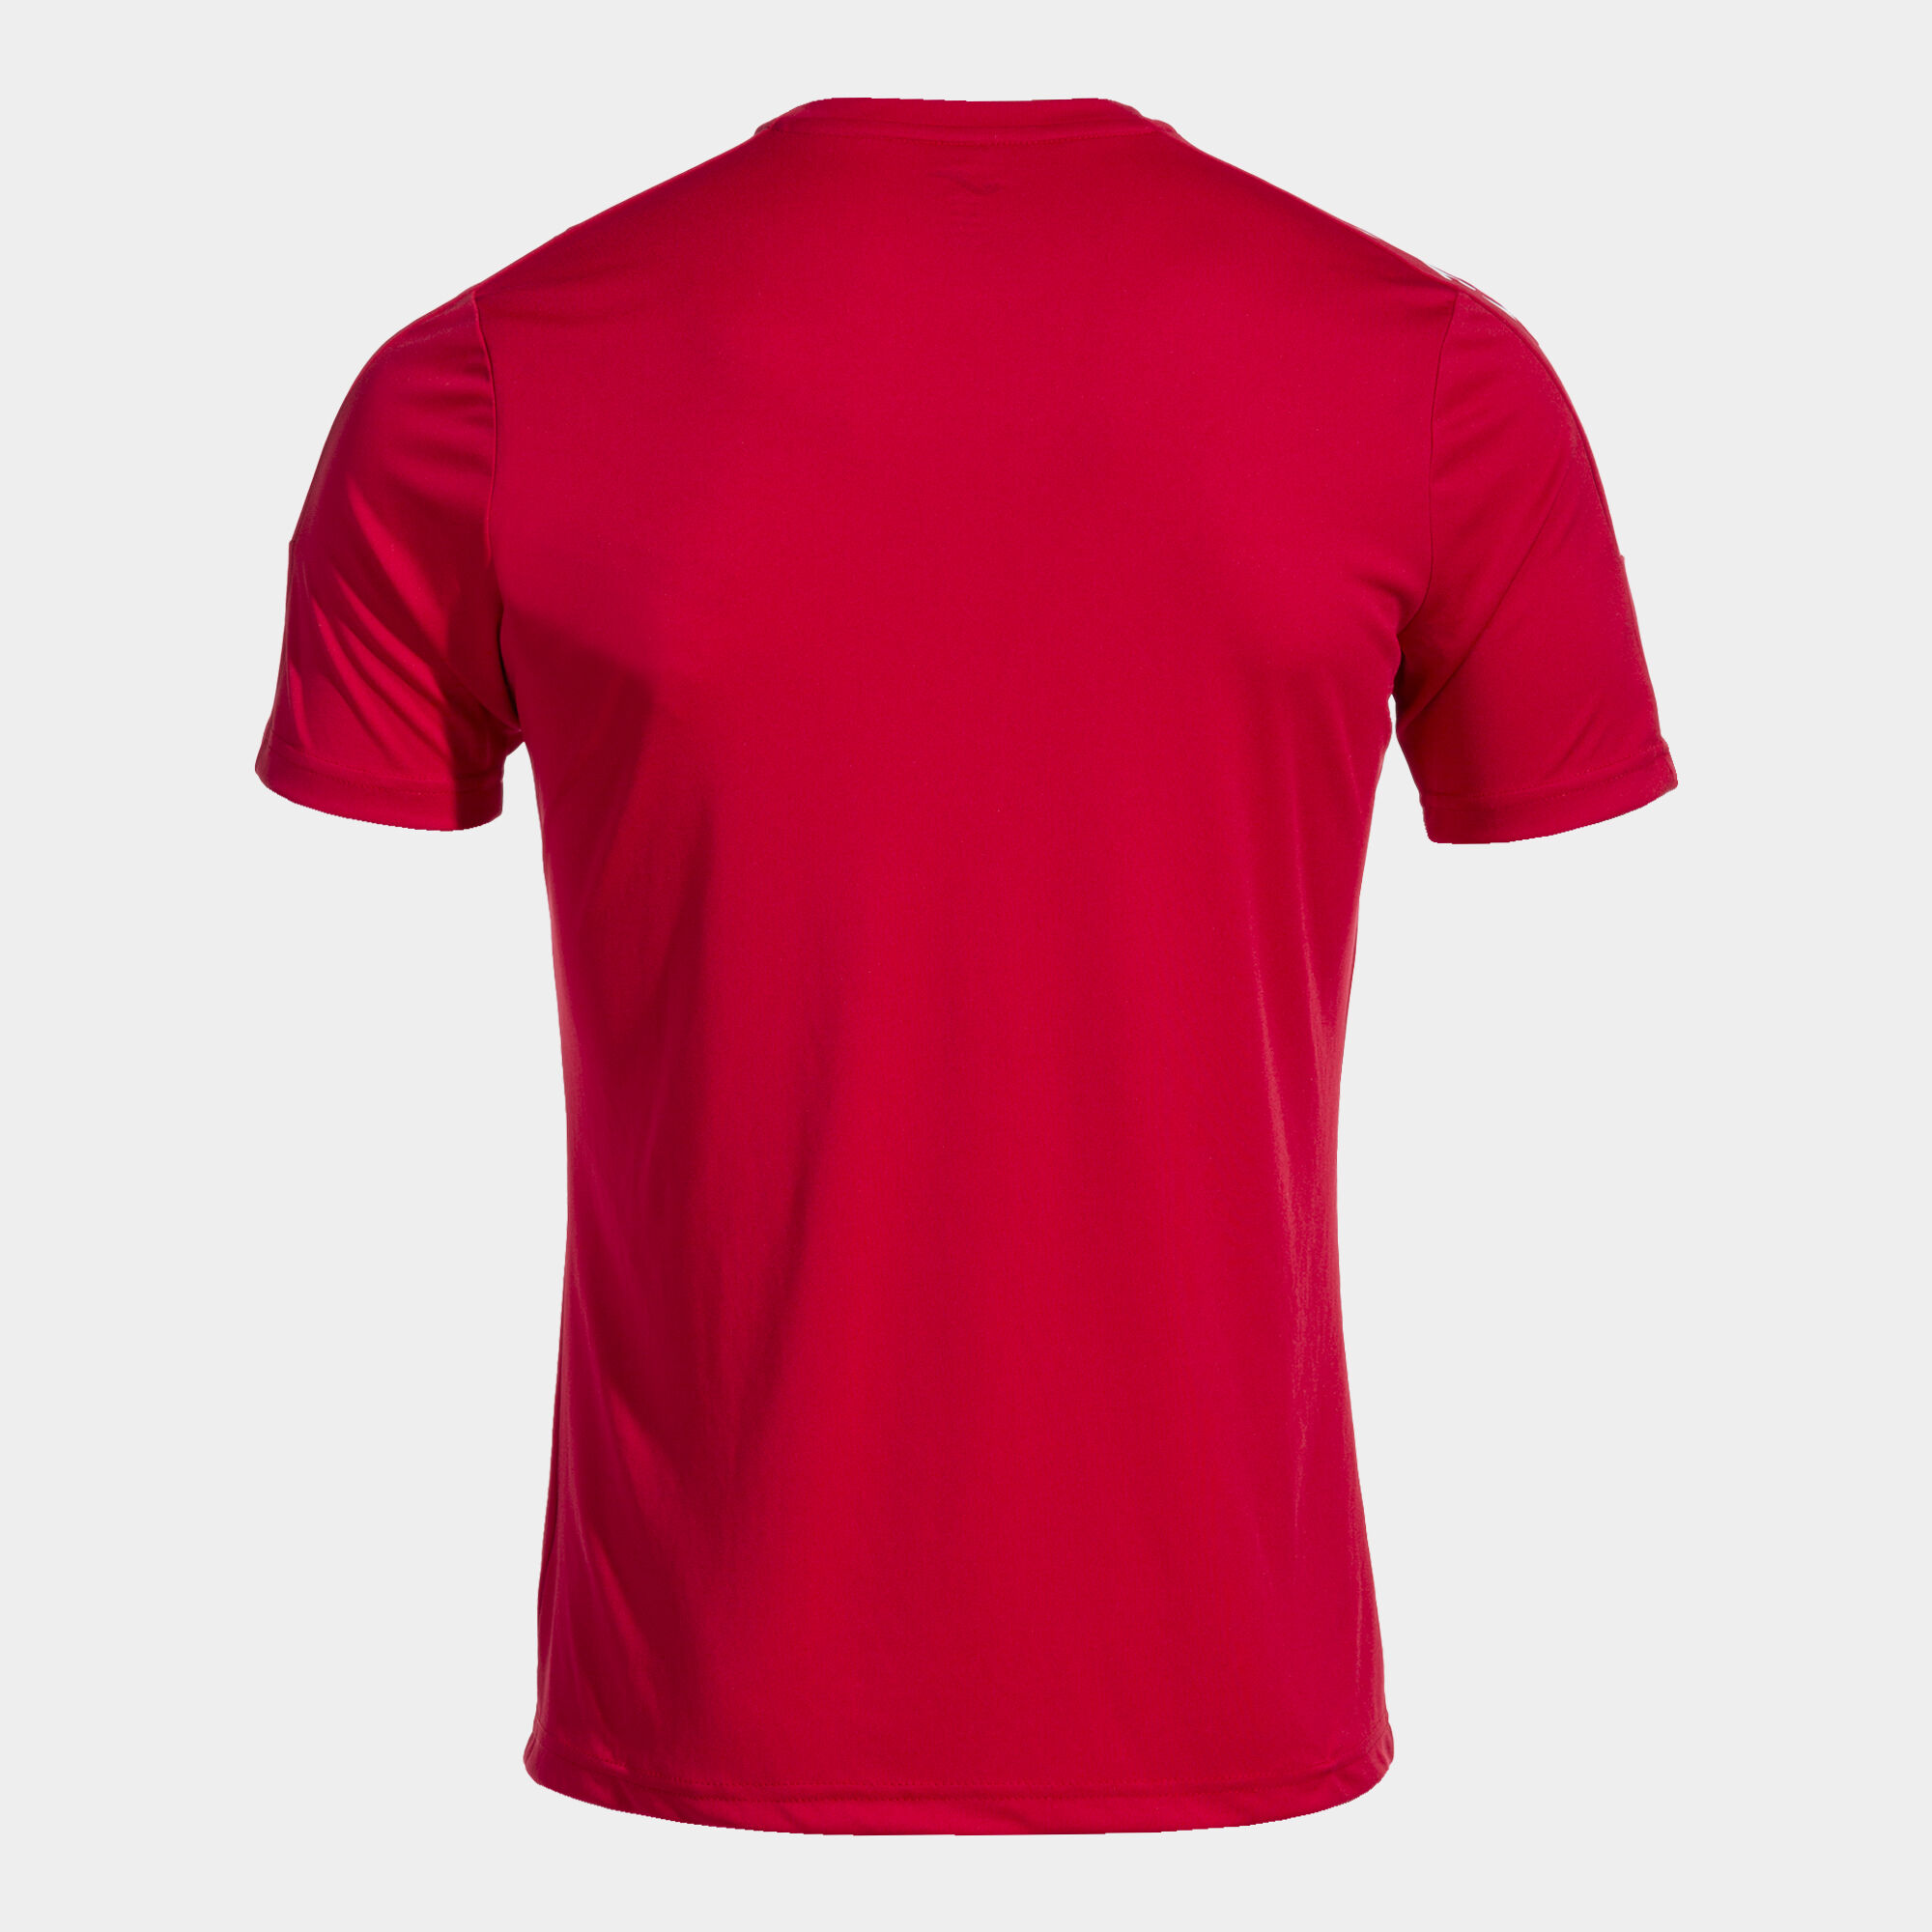 Camiseta manga corta hombre Olimpiada rojo